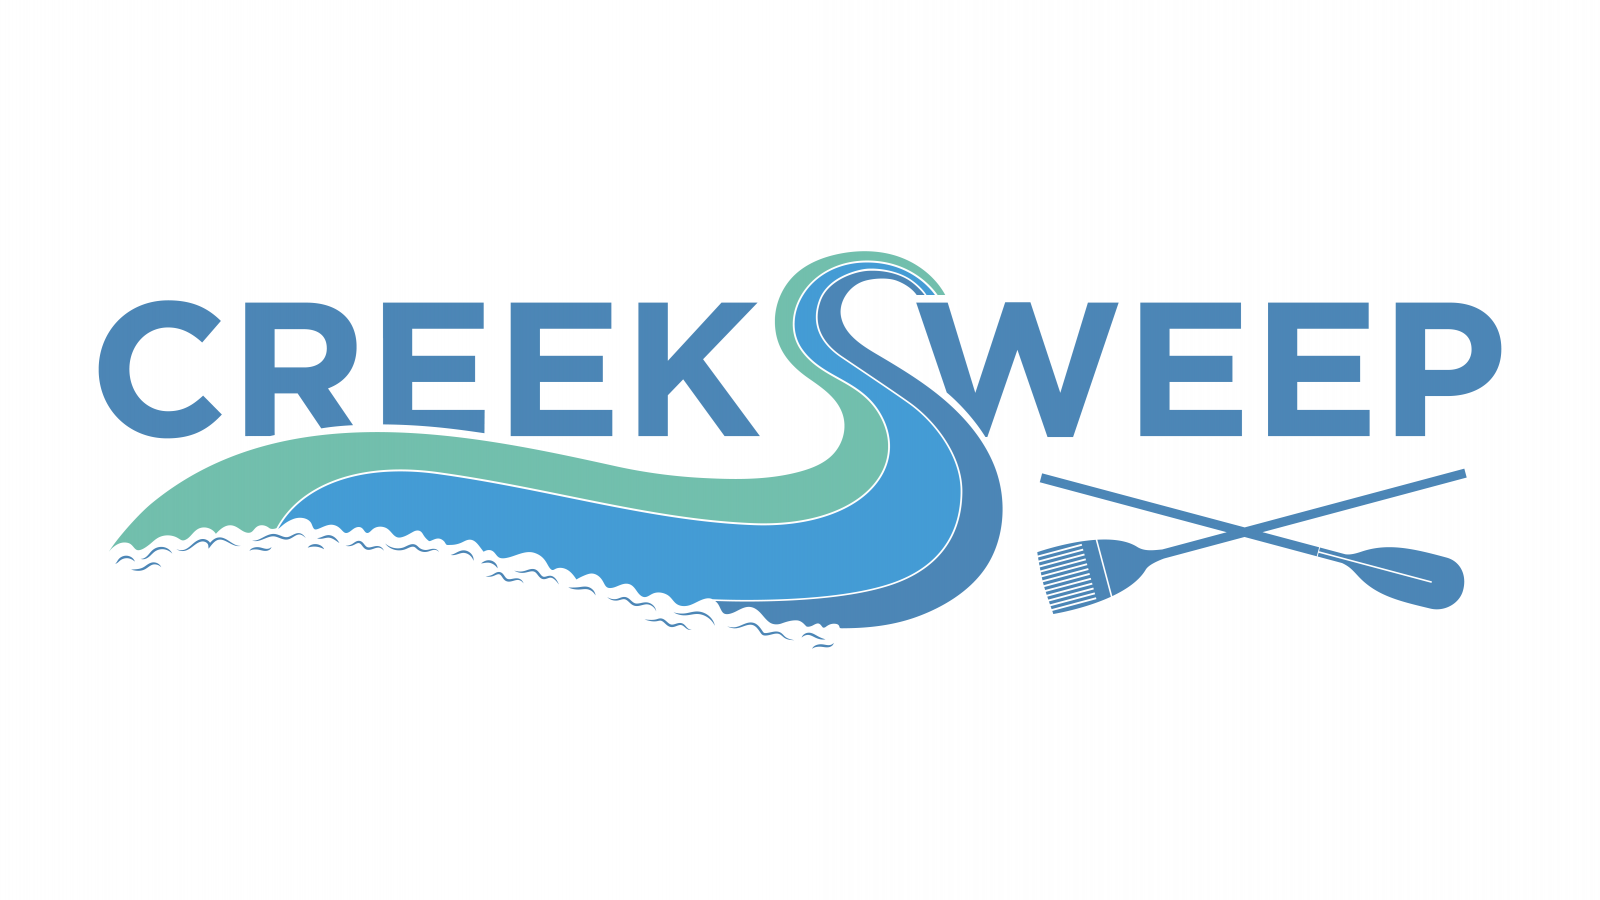 creek sweep 2020 logo